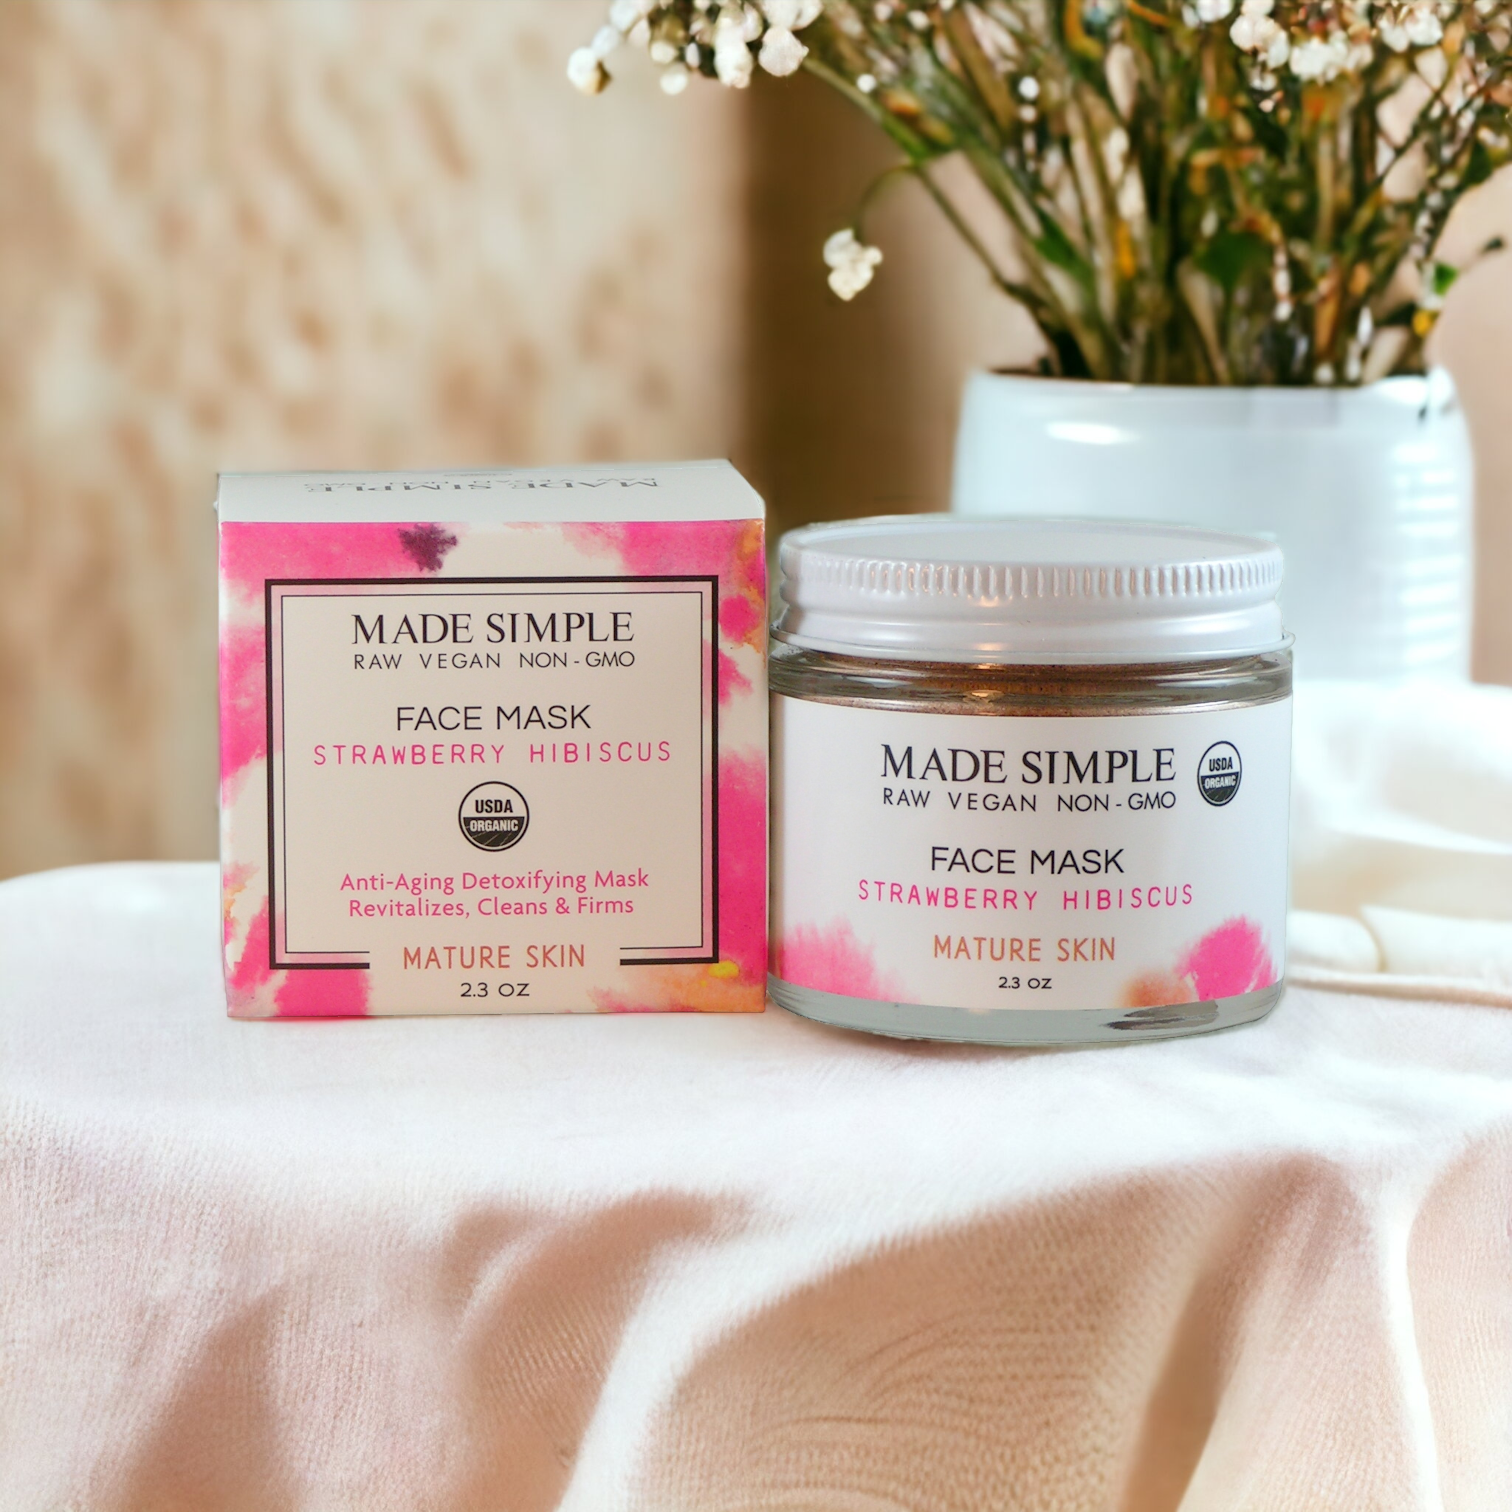 Made Simple Skin Care certified organic raw vegan nonGMO strawberry hibiscus face mask